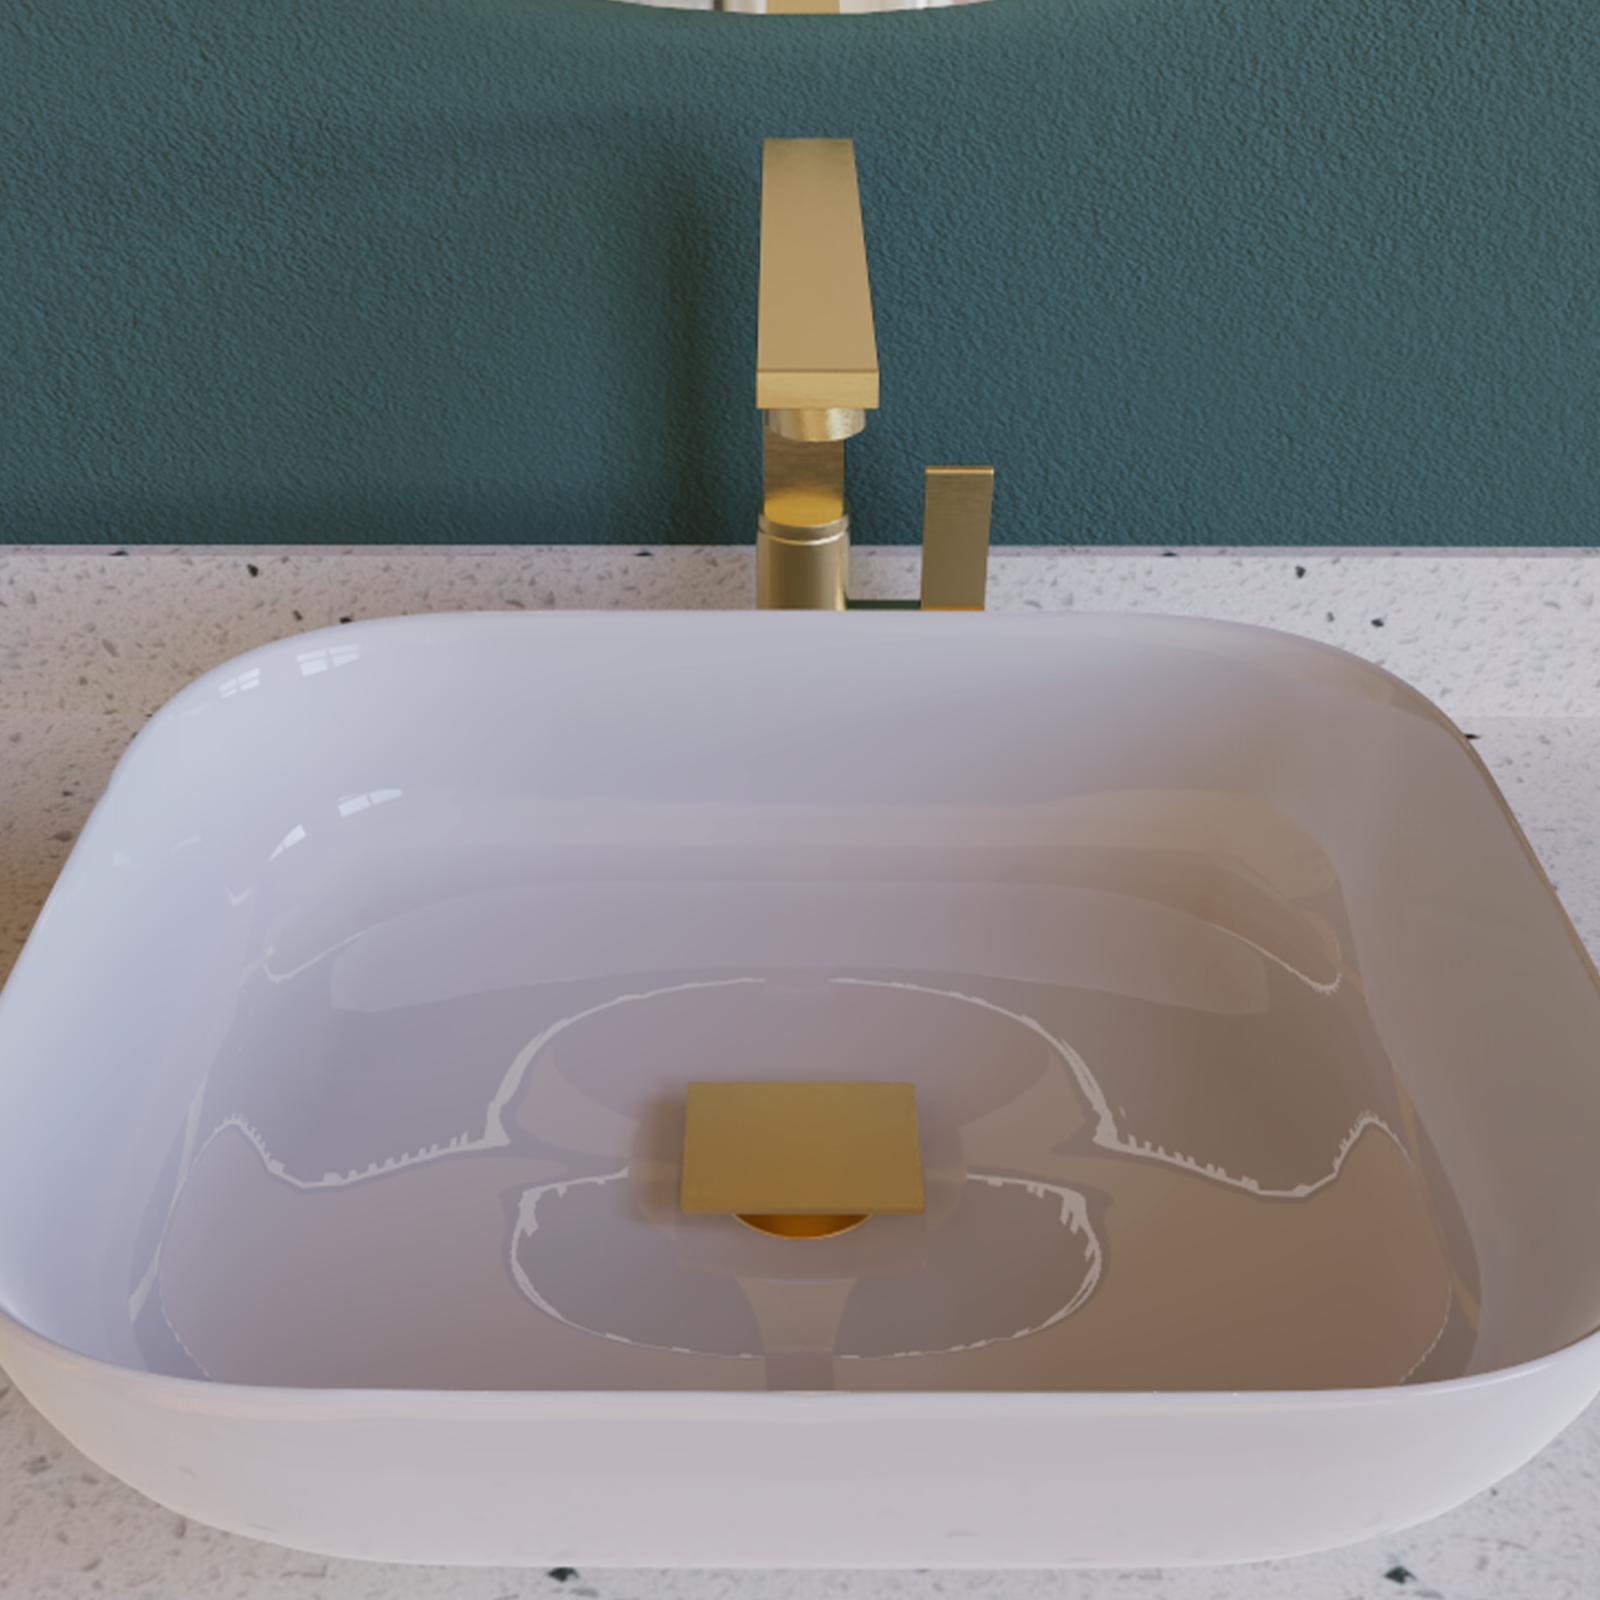 DAX Square Vanity Sink Pop up Drain, Brass Body, 2-3/4 x 8-7/8 Inches (DAX-82012)